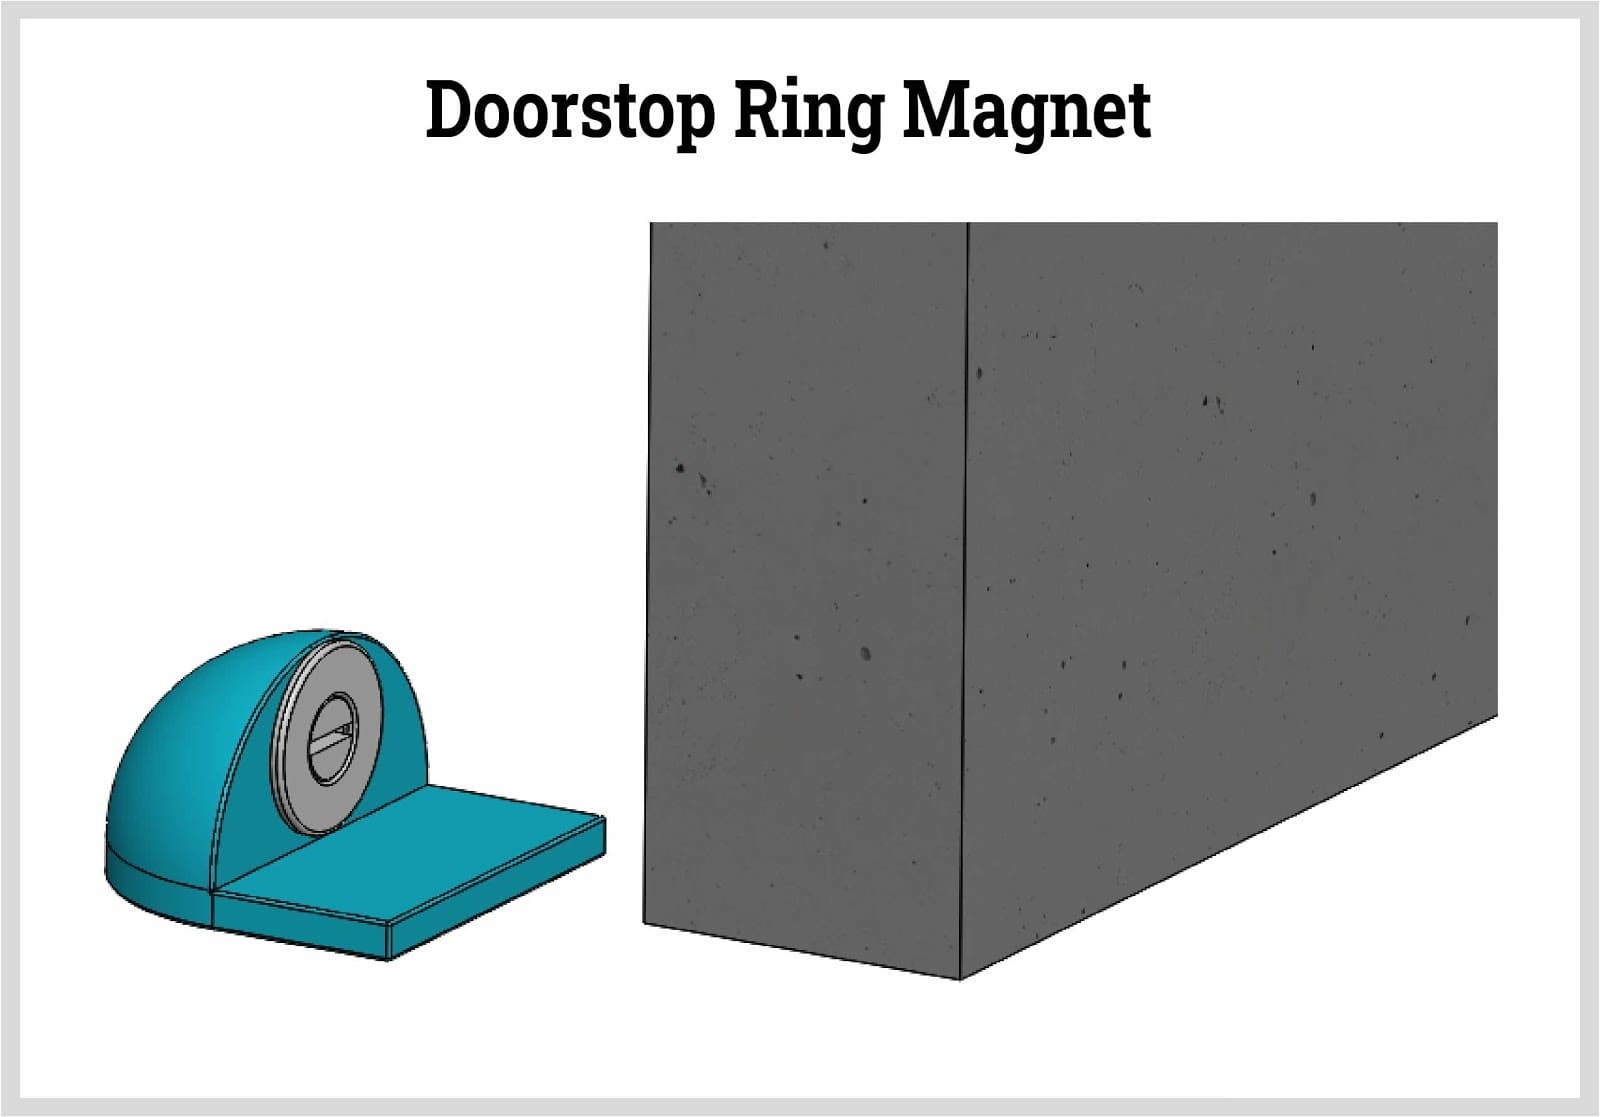 dørstop-ring-magnet